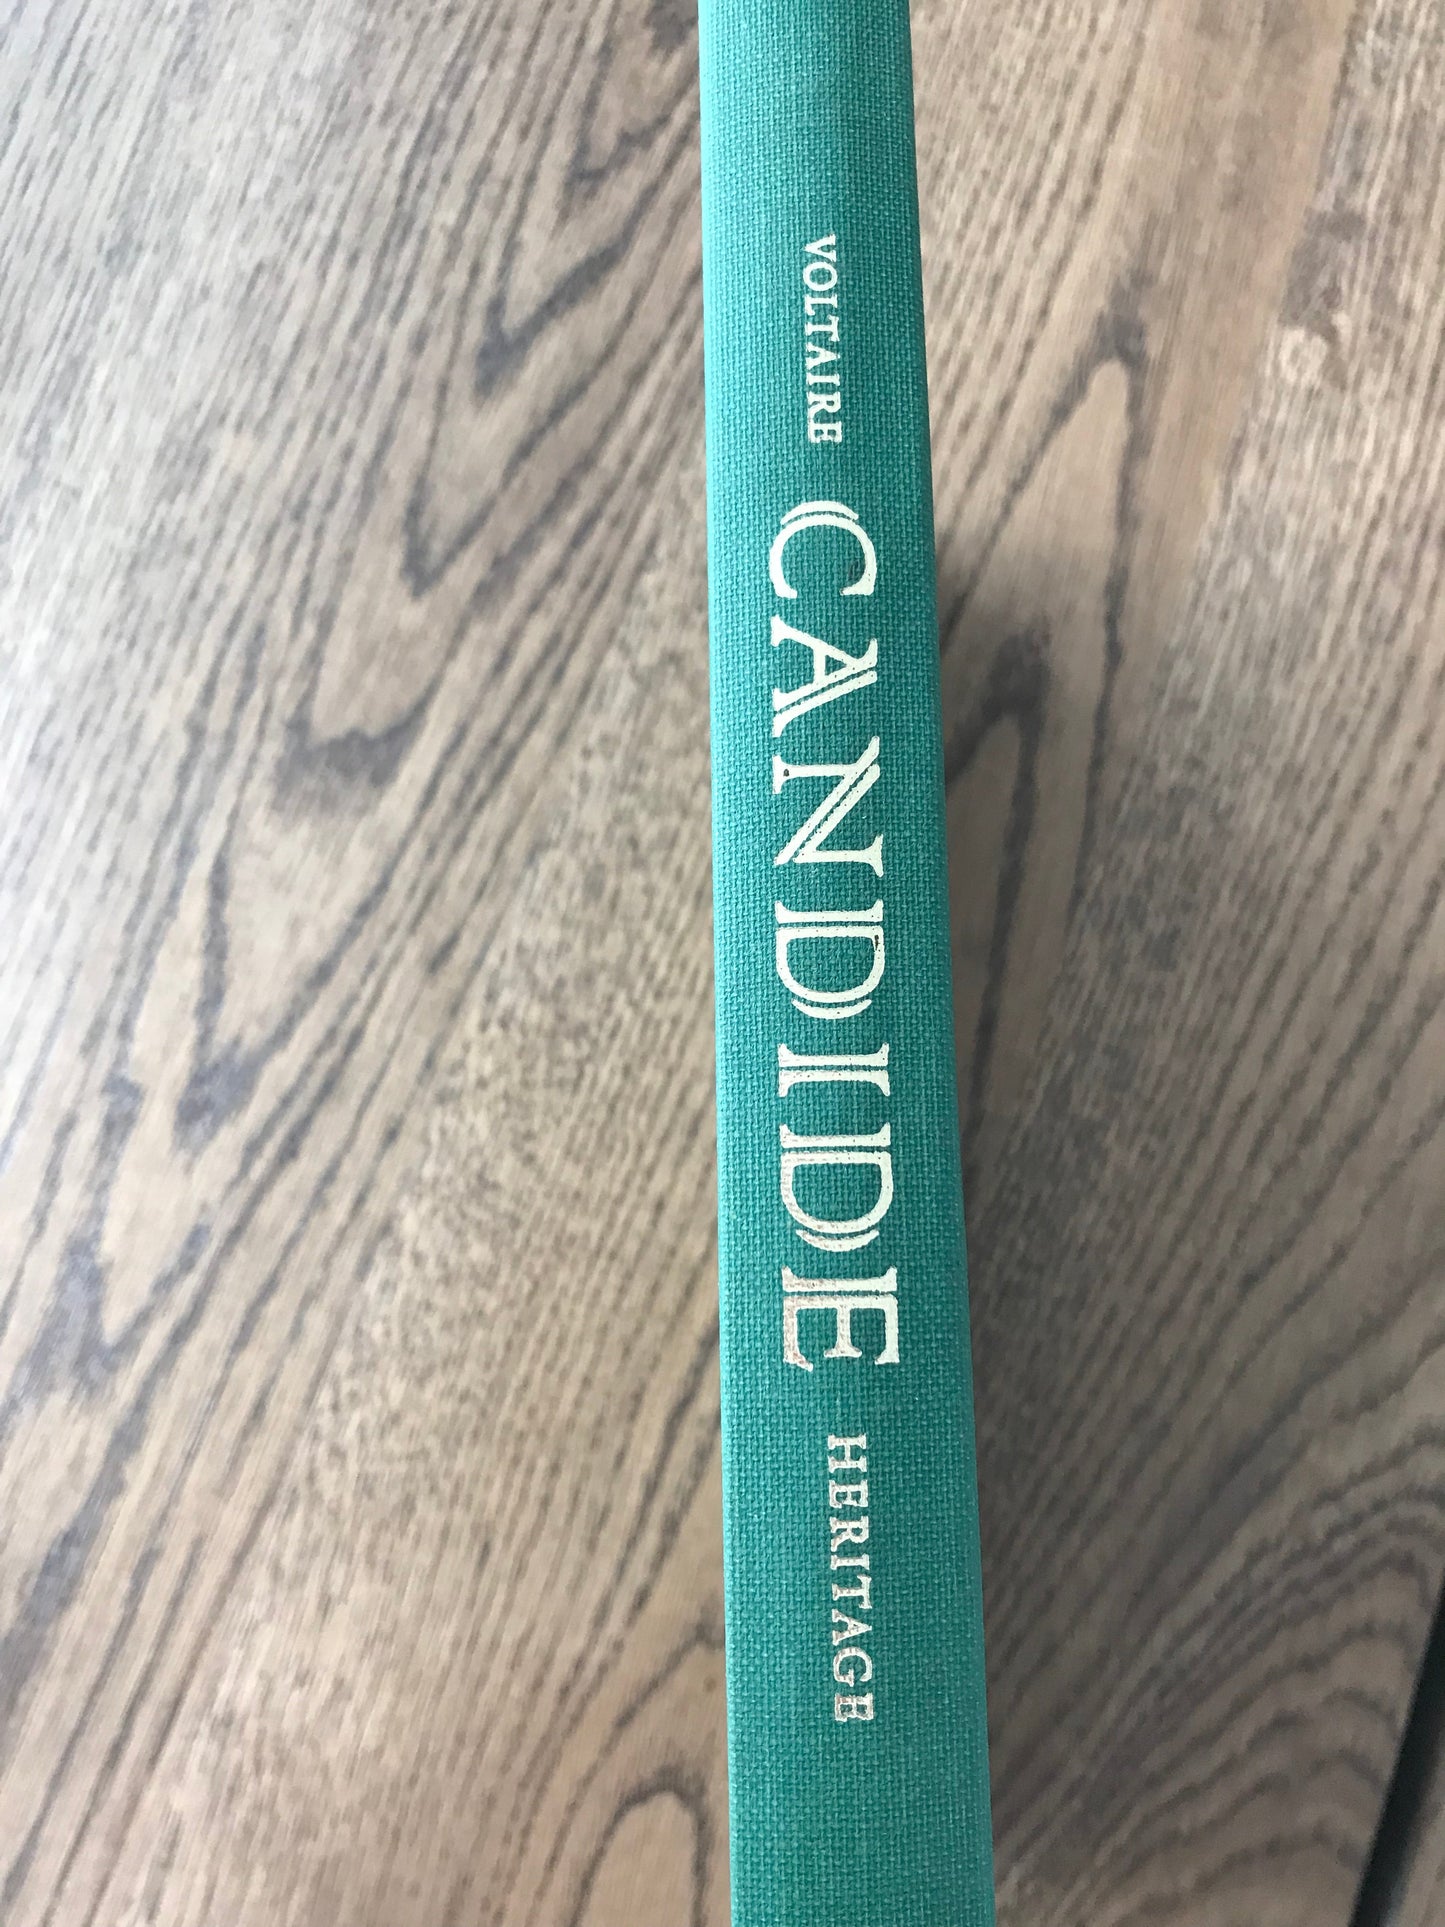 CANDIDE OR OPTIMISM - BY FRANCOIS MARIE AROUET DE VOLTAIRE BooksCardsNBikes